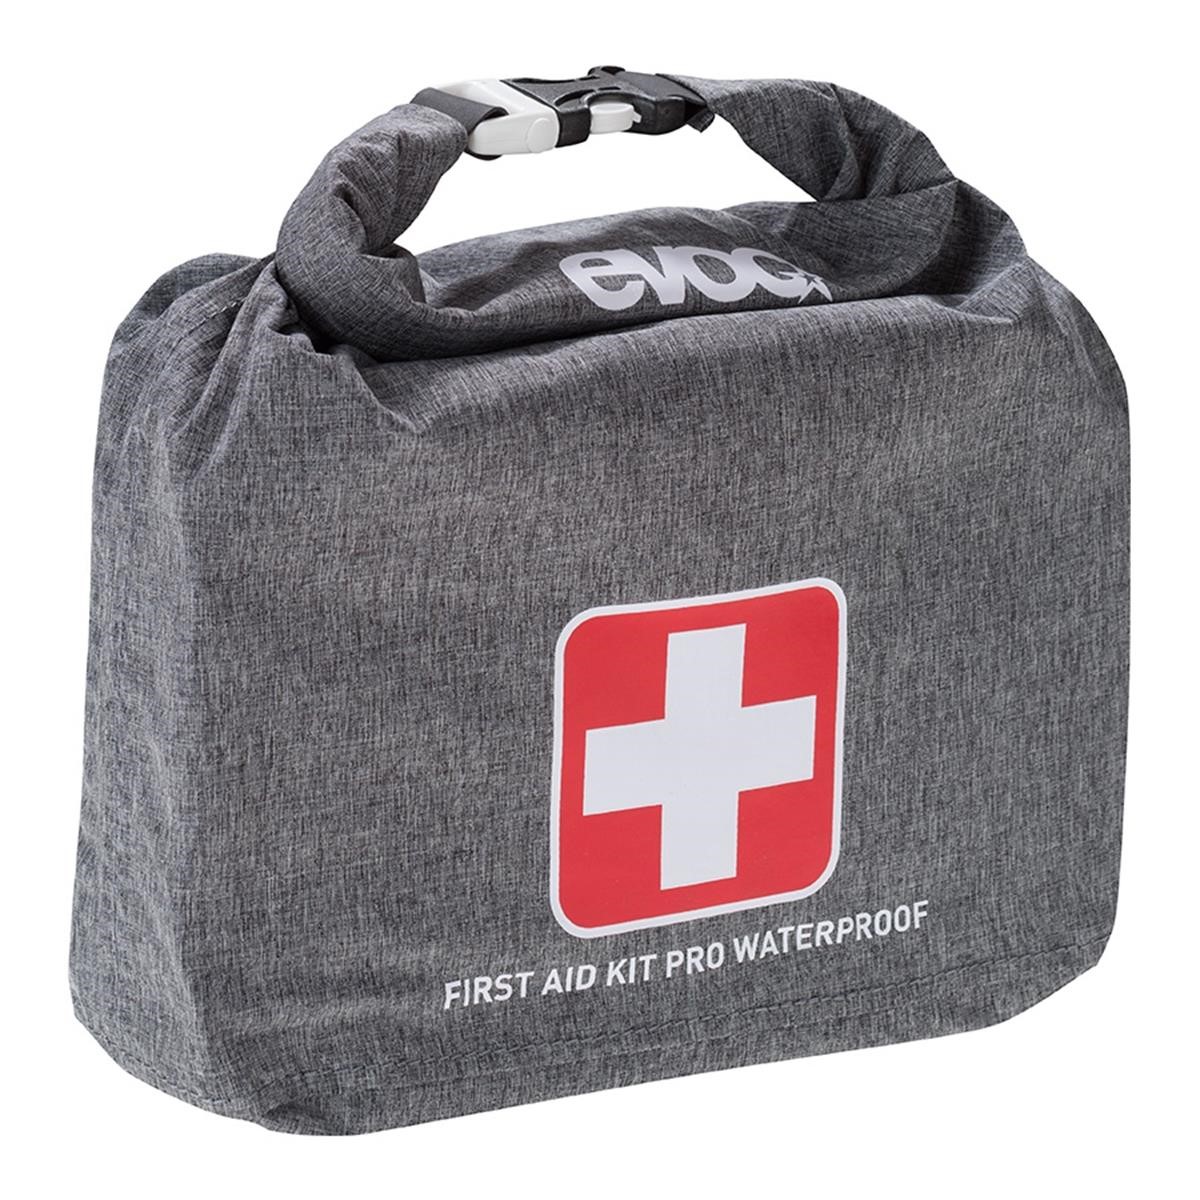 Evoc Borsone First Aid Kit Pro Waterproof Black/Heather Grey, 3 Liter